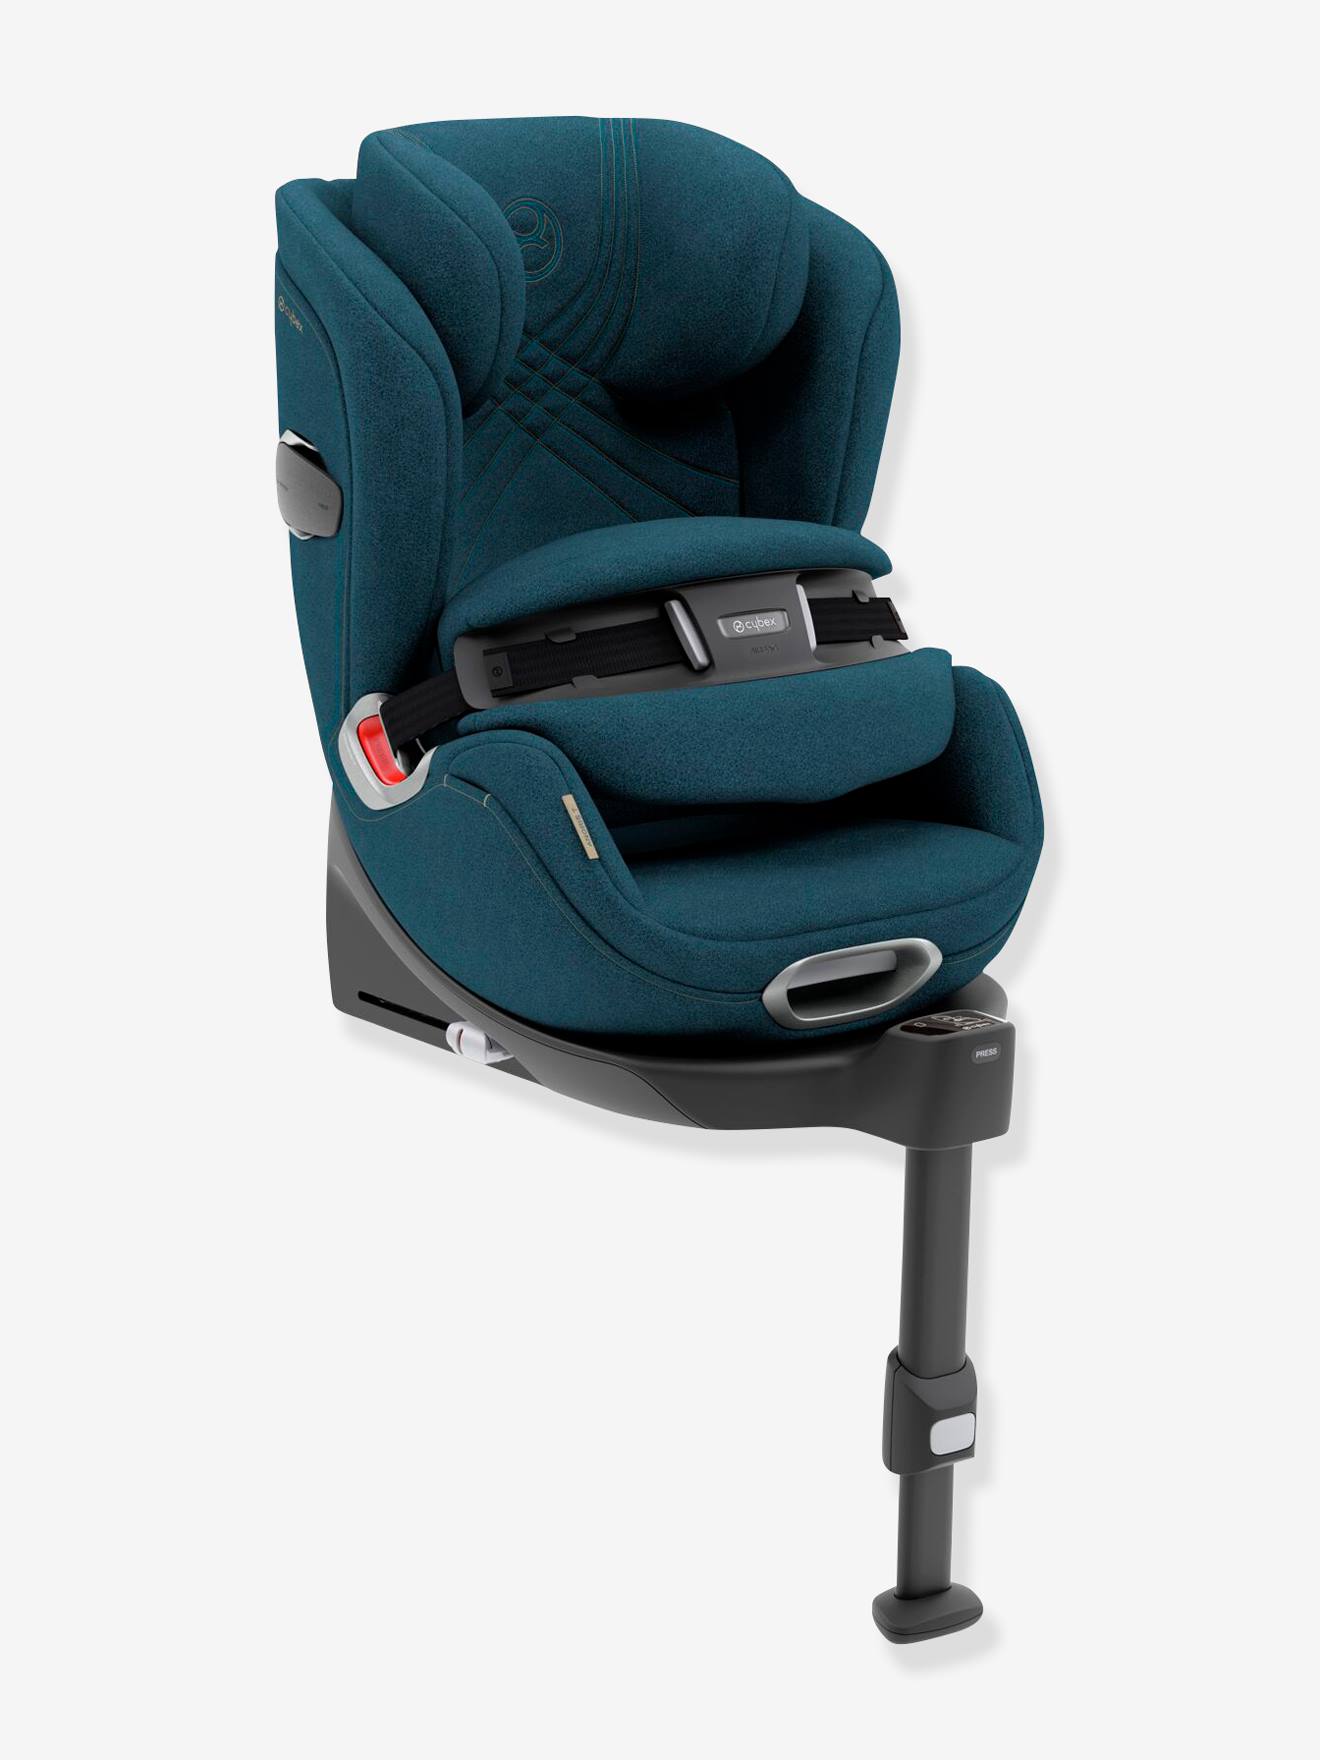 Autostoel CYBEX Platinum Anoris T i-Size, 75 à 115 cm, gelijjk aan groep 1/2 blauw (bergblauw)